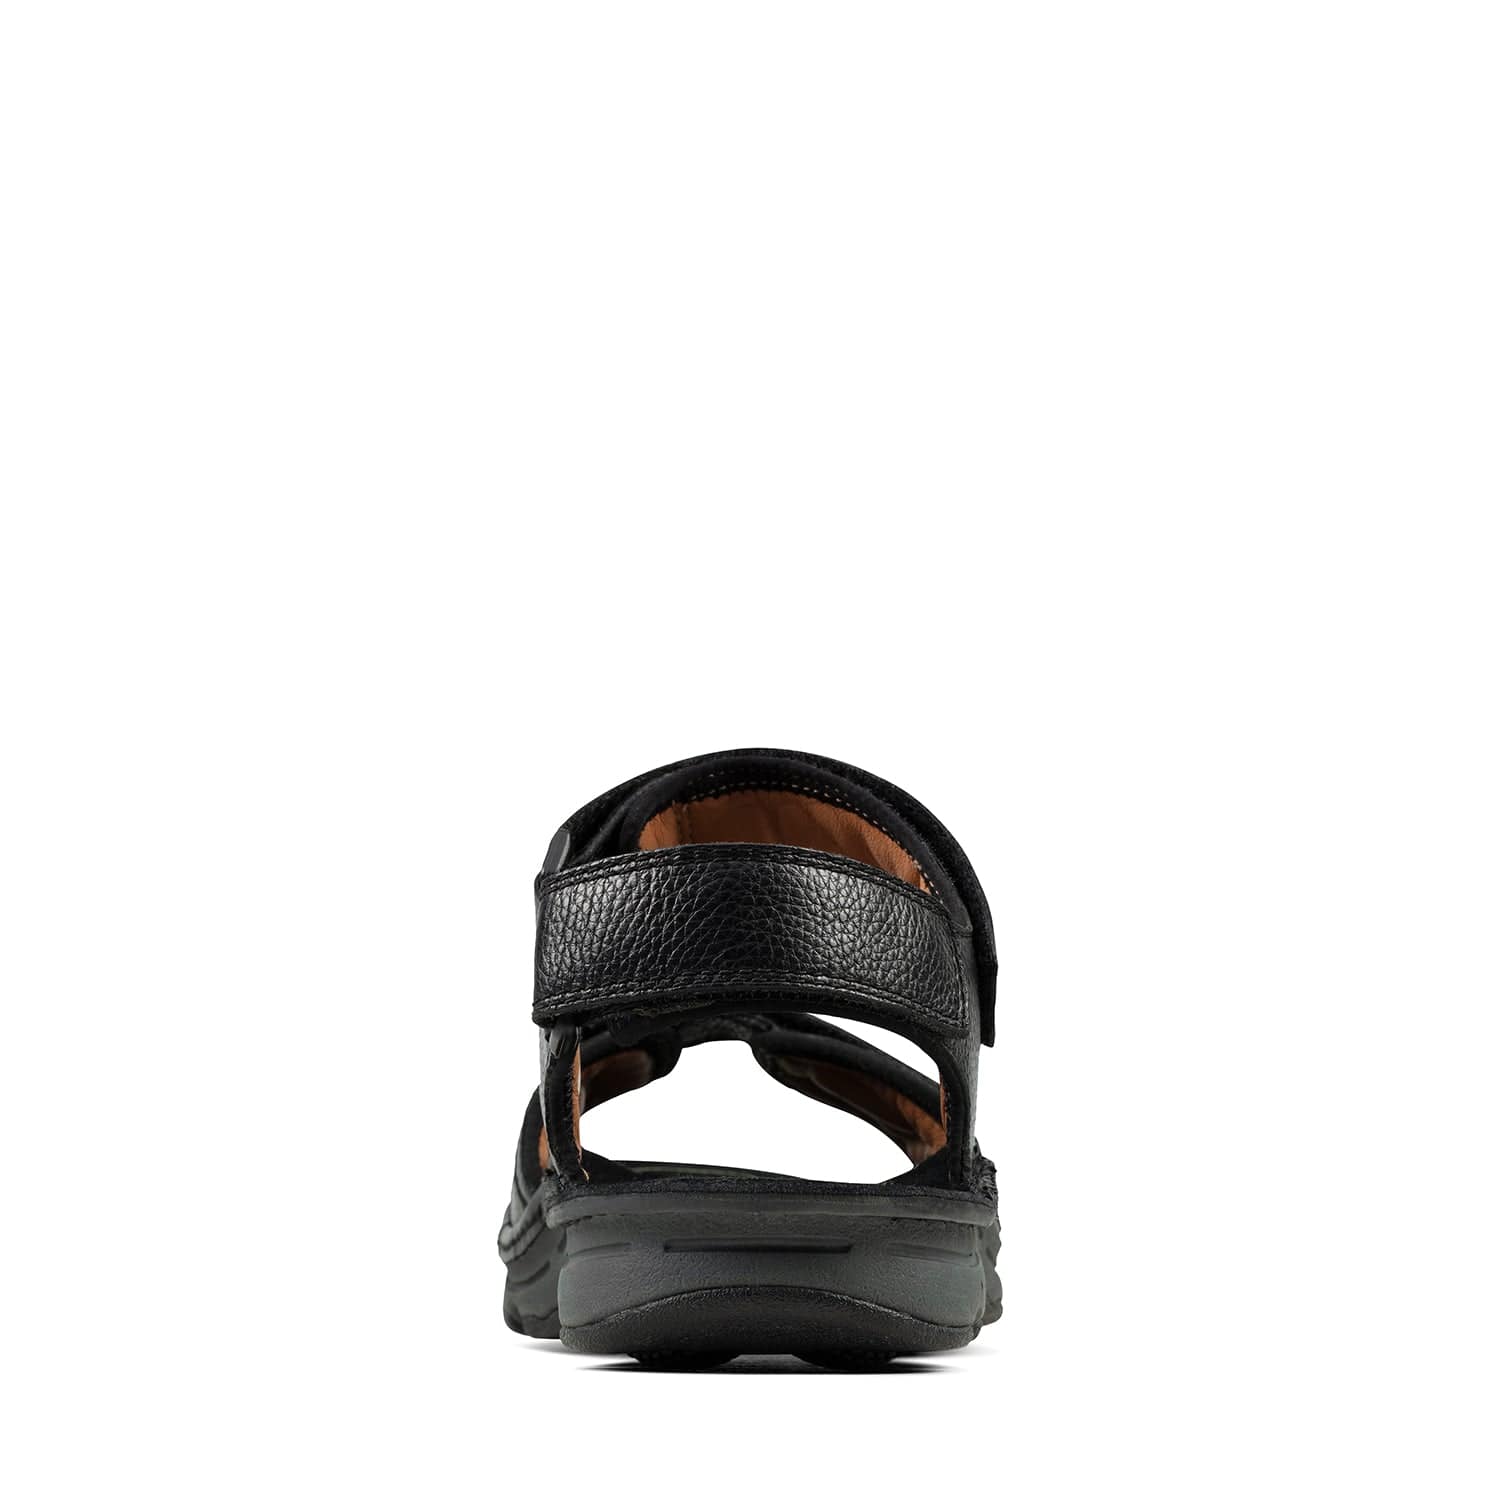 Clarks Atl Part - Sandals - Black - 261519967 - G Width (Standard Fit)